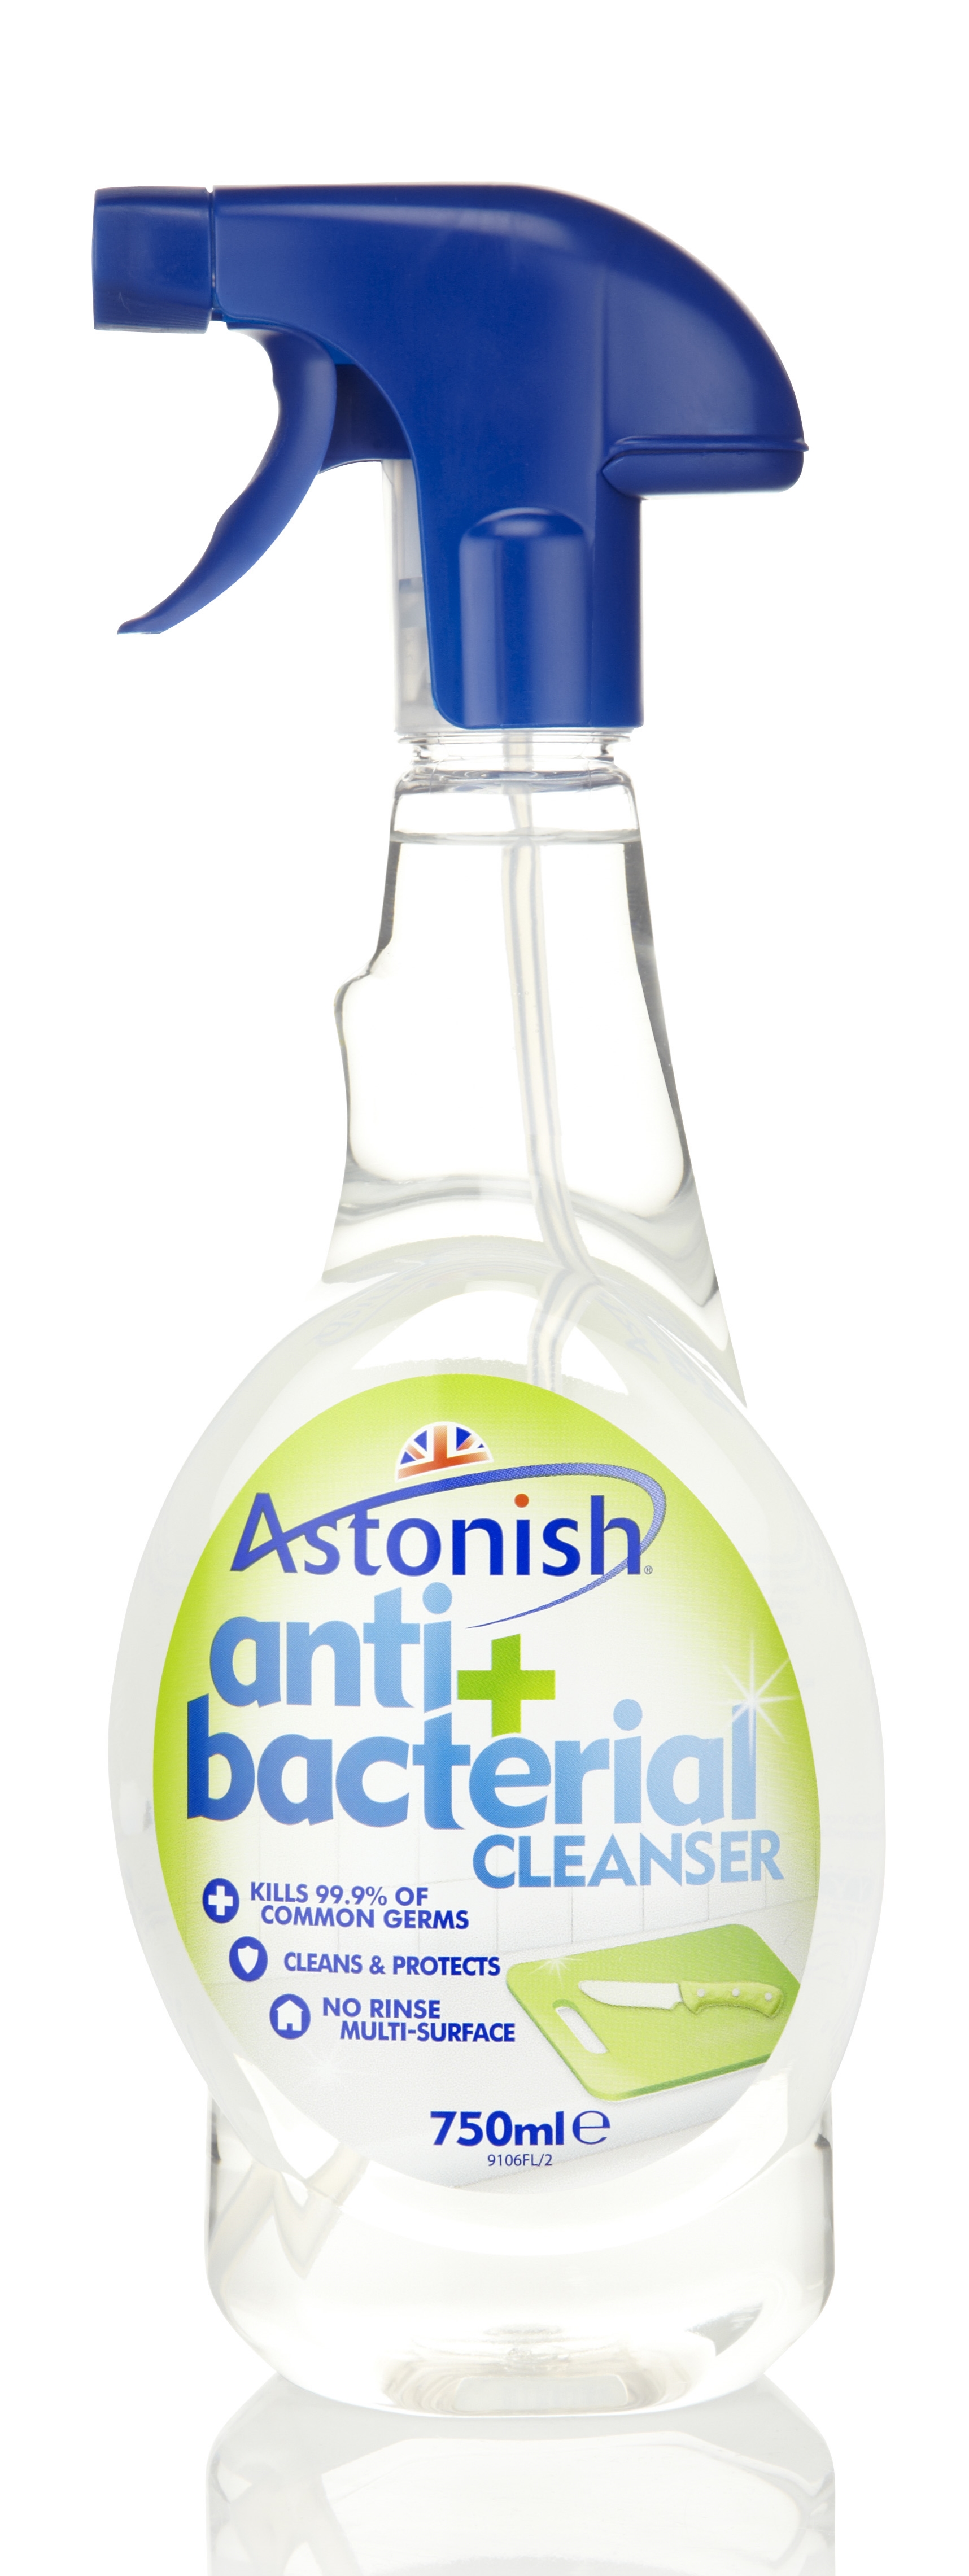 Astonish Antibacterial Cleanser 750ml.jpg